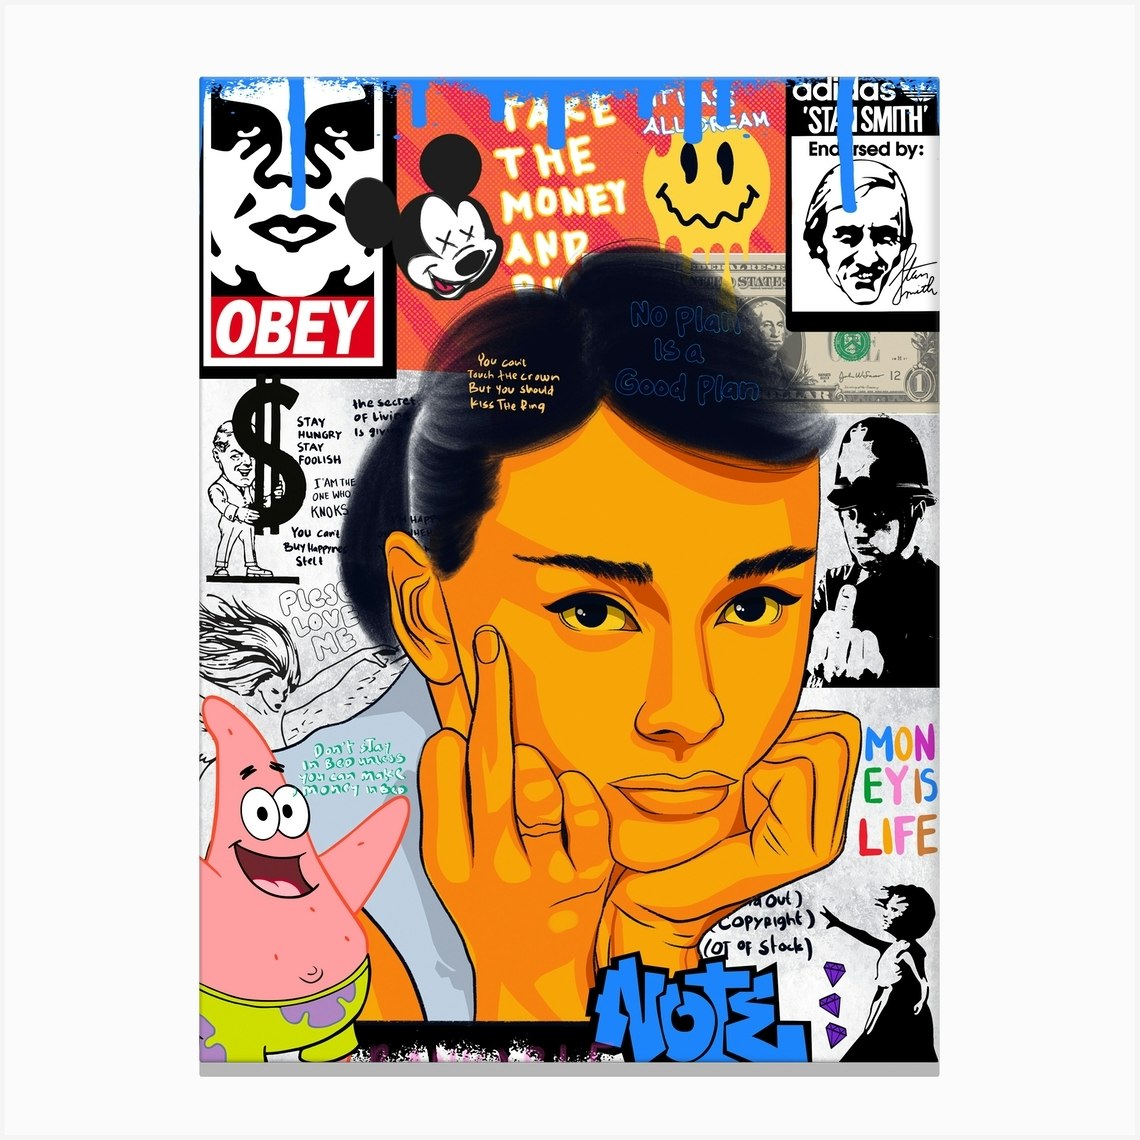 Audrey Hepburn Pop Art Canvas